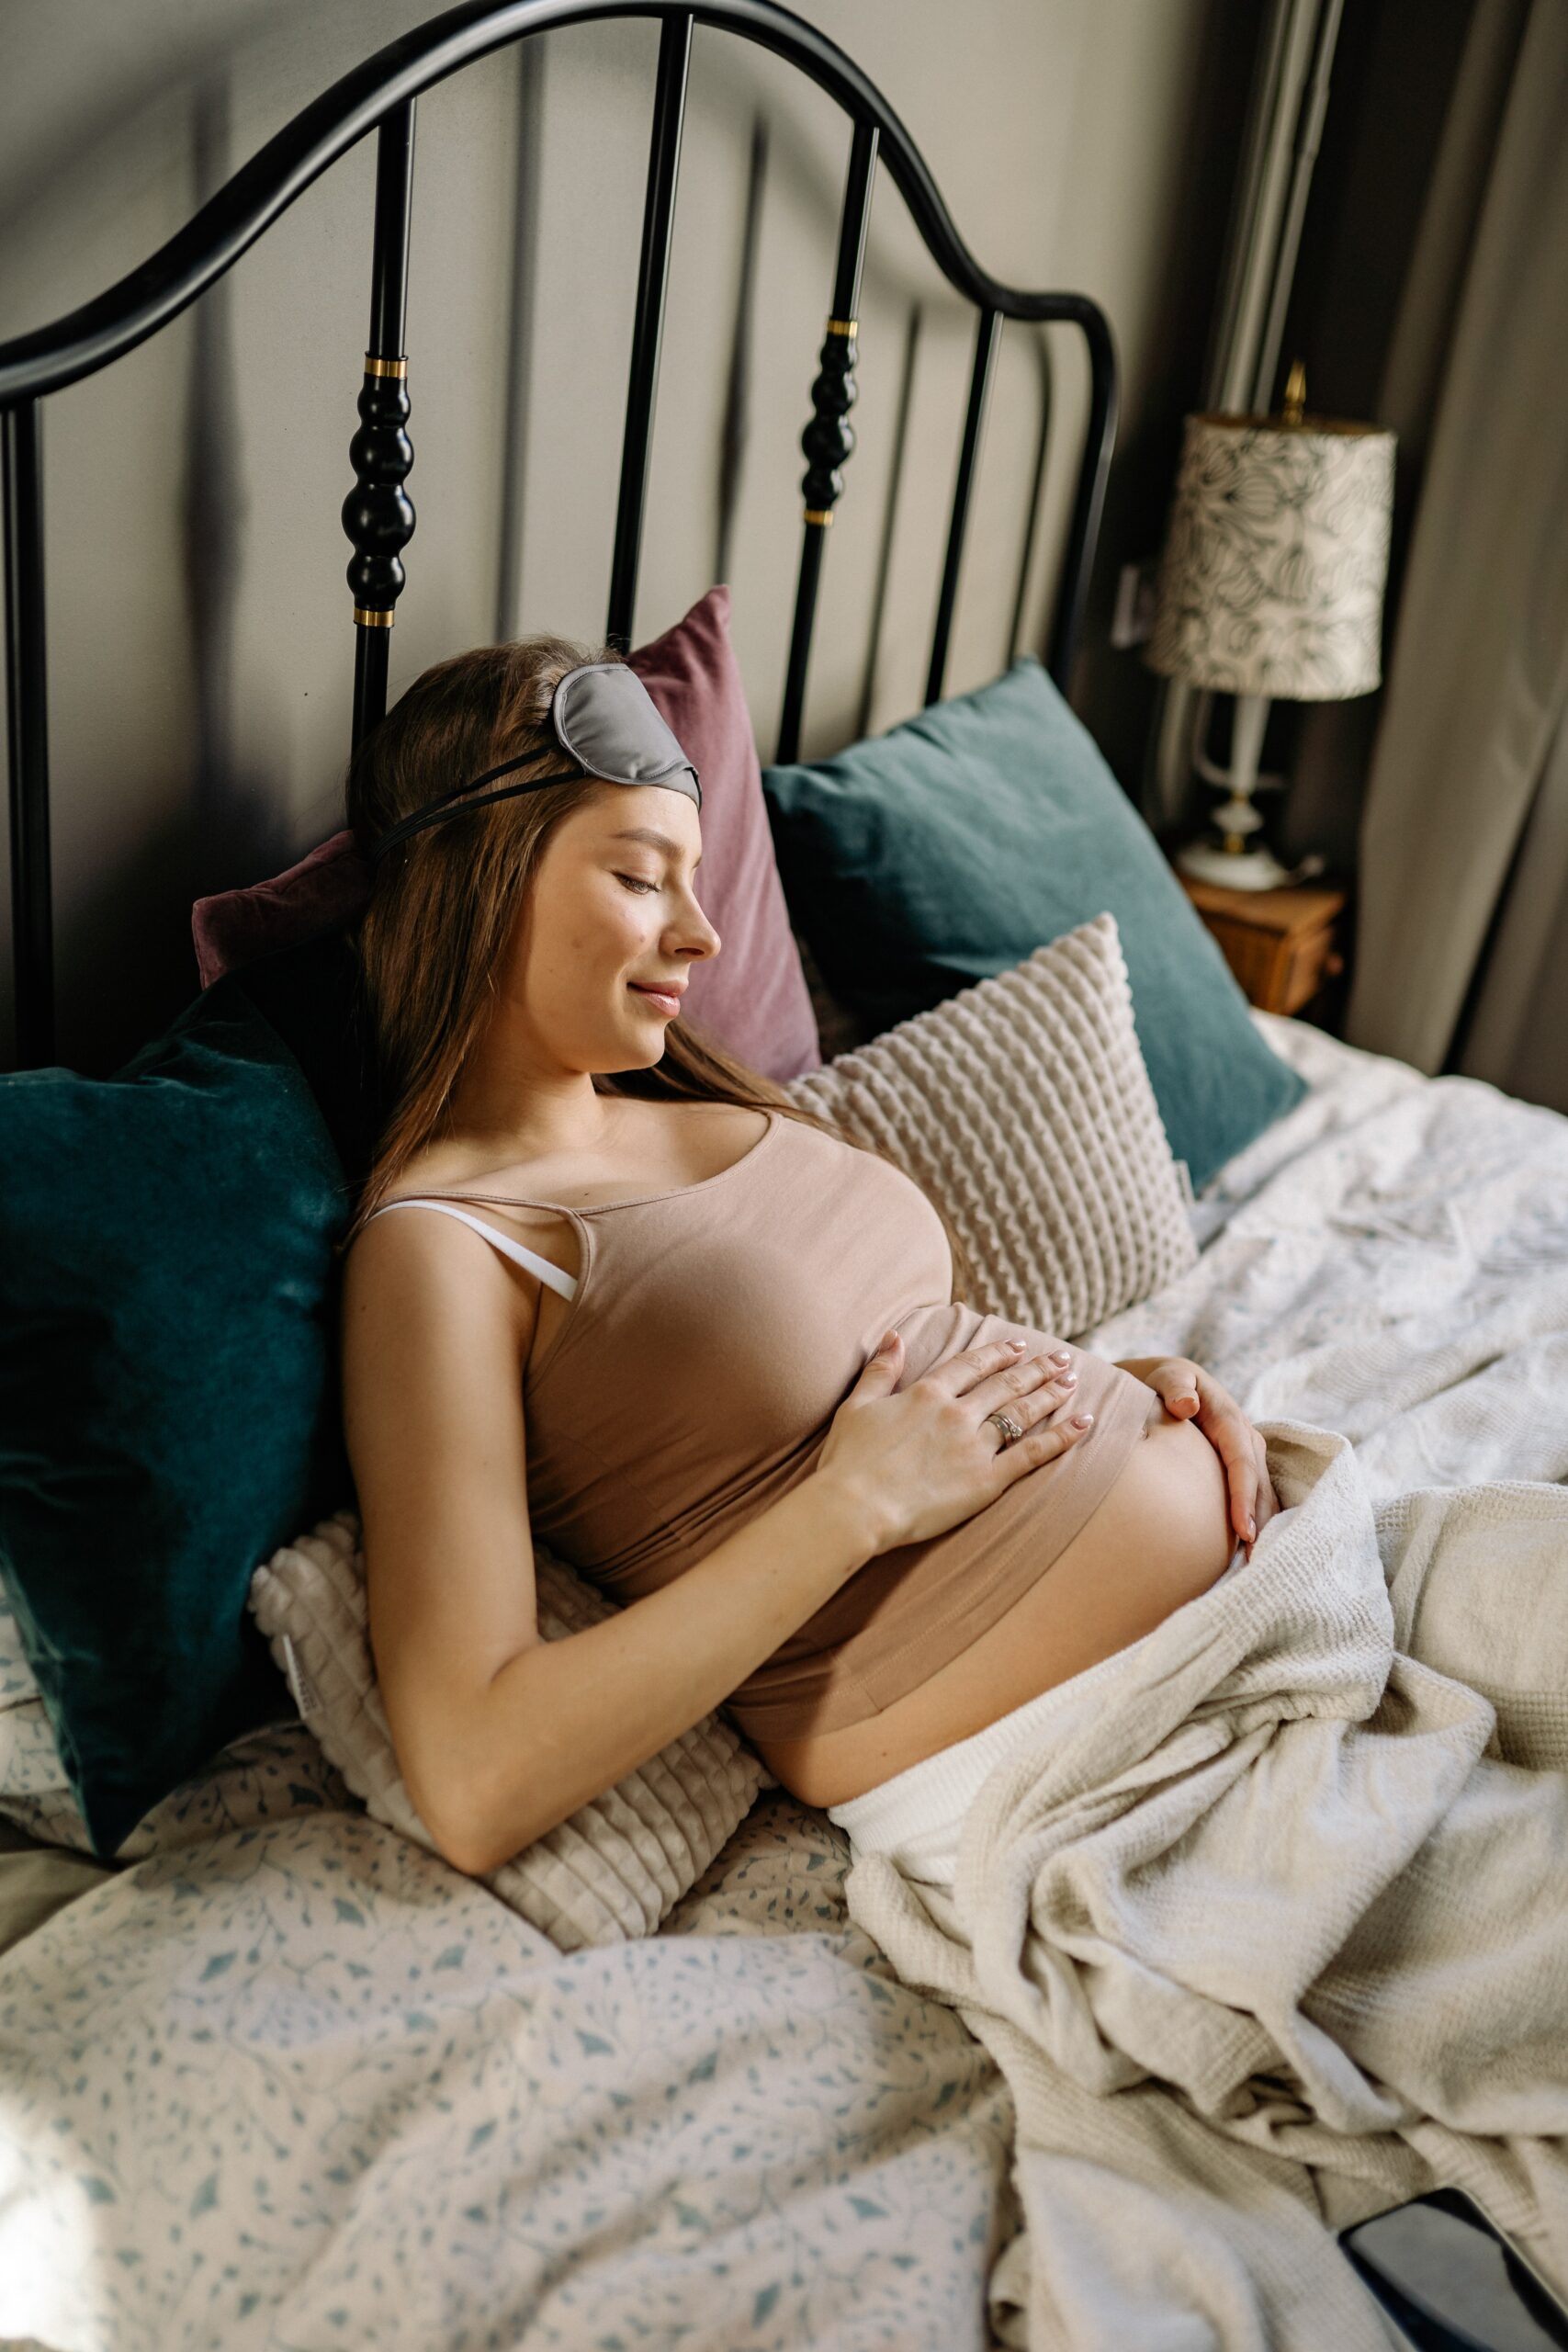 Pregnant woman getting a good night's sleep